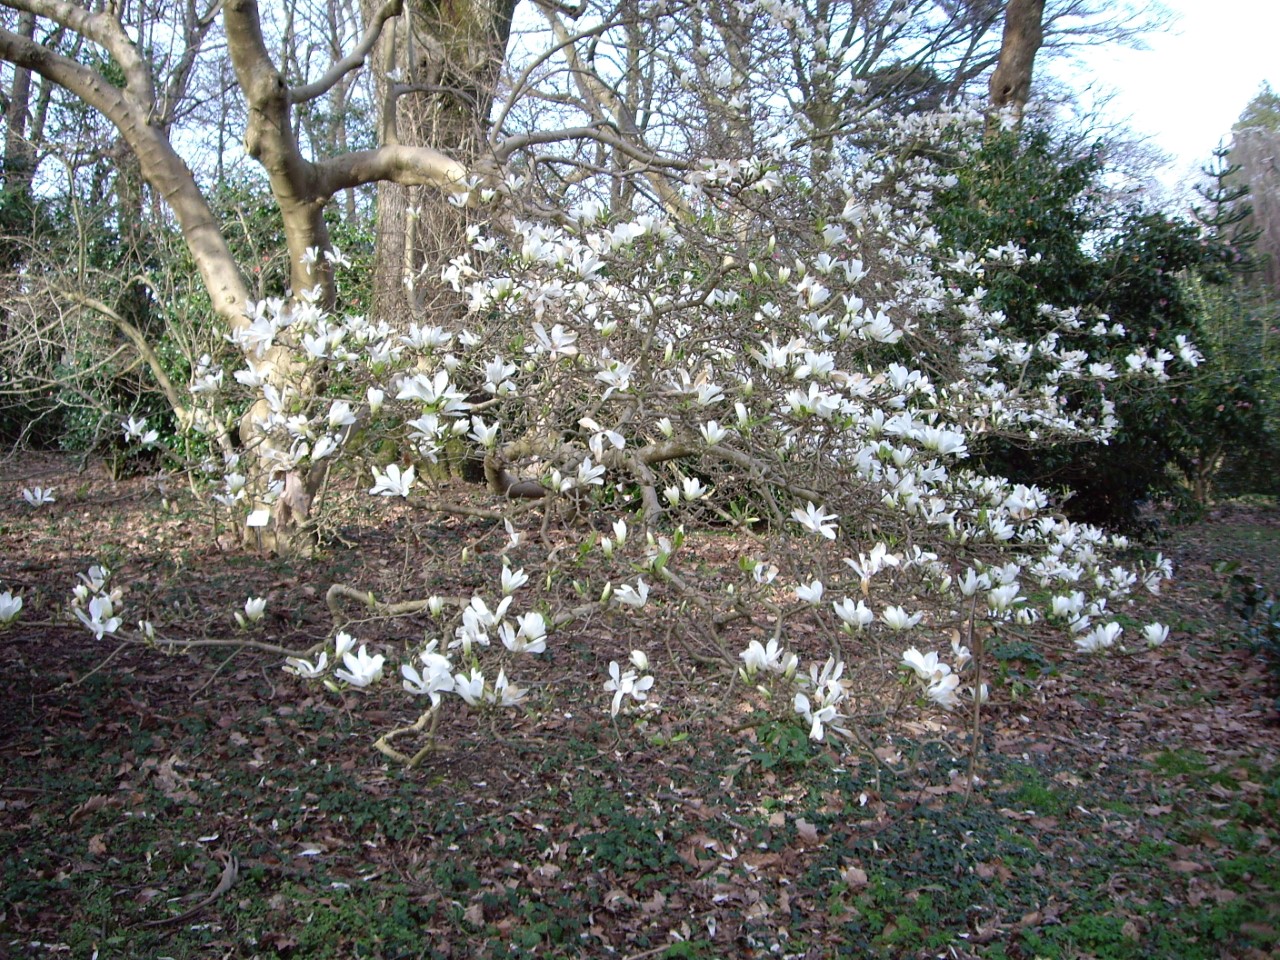 magnolia kobus